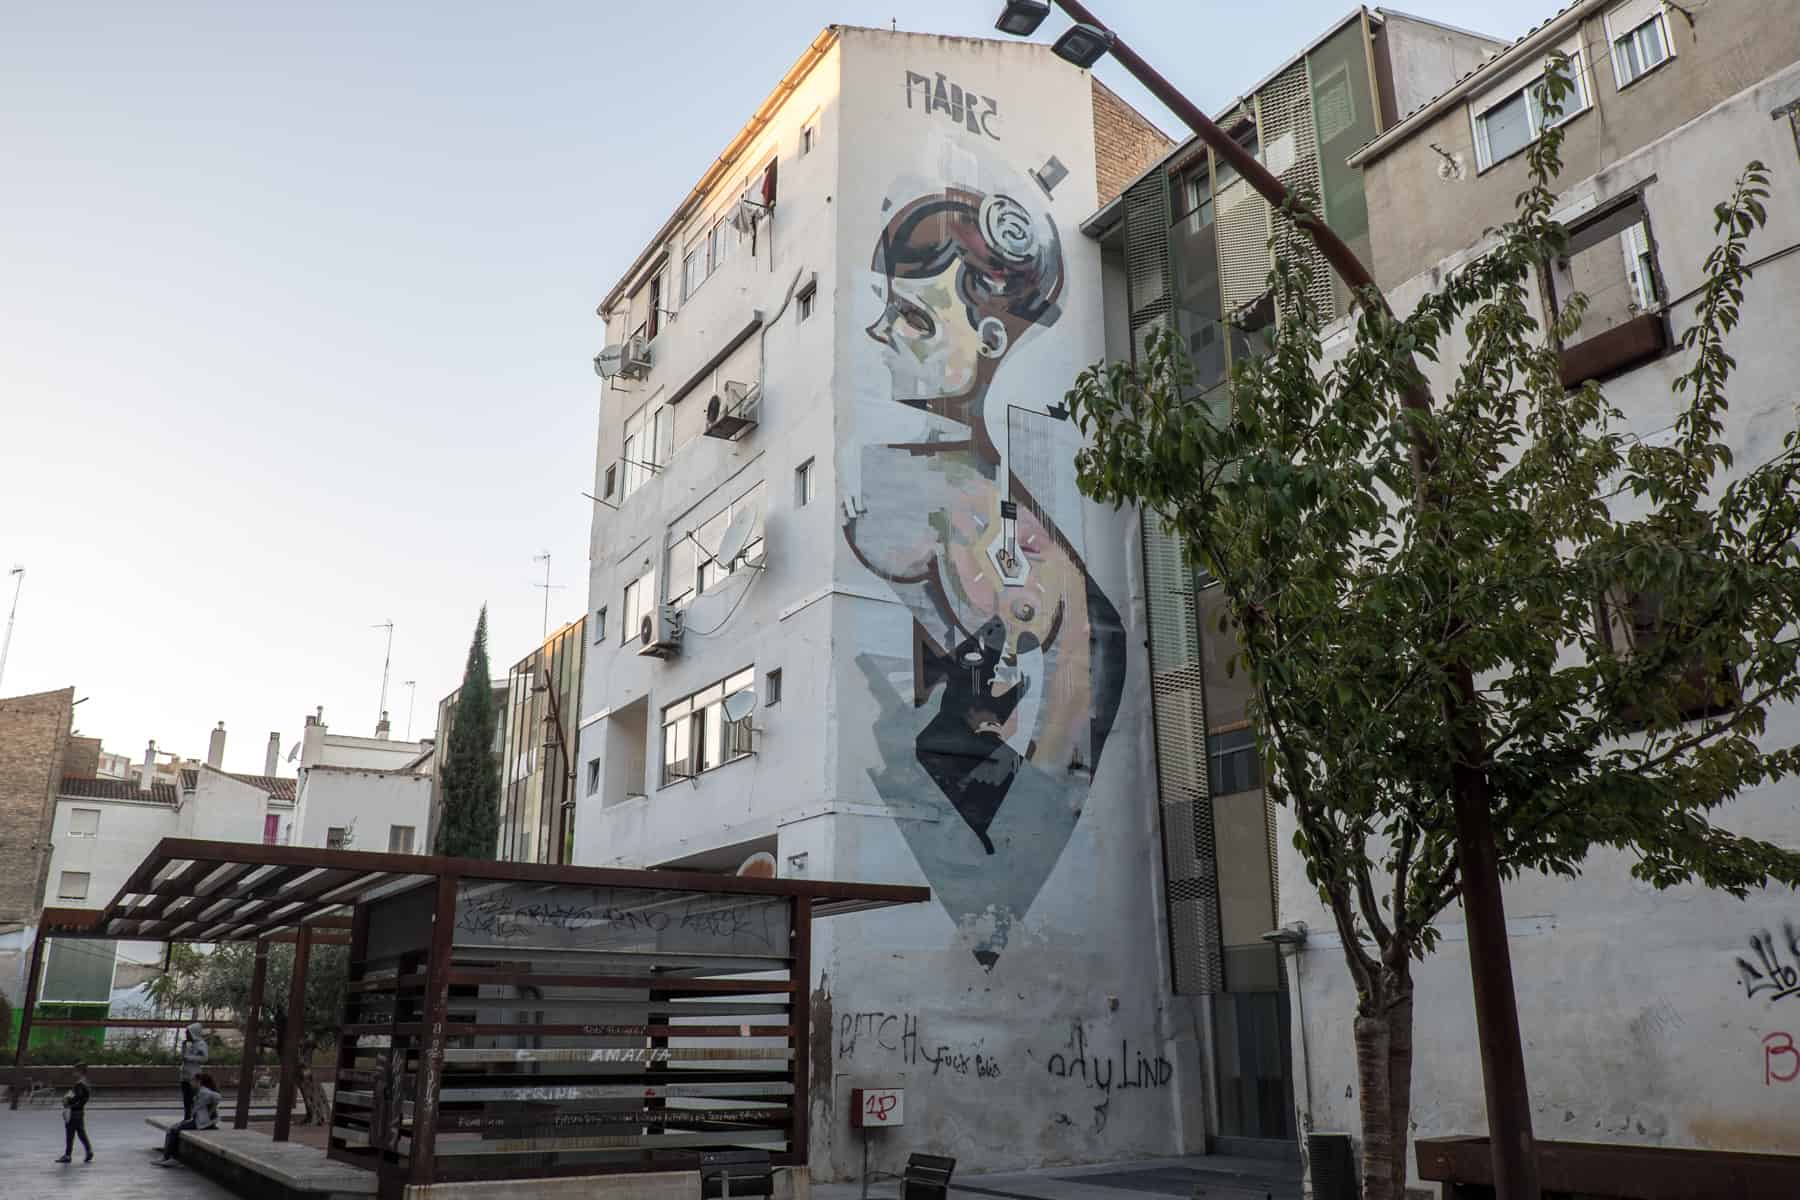 A residential housing block in Zaragoza featuring a street art mural of a woman. 